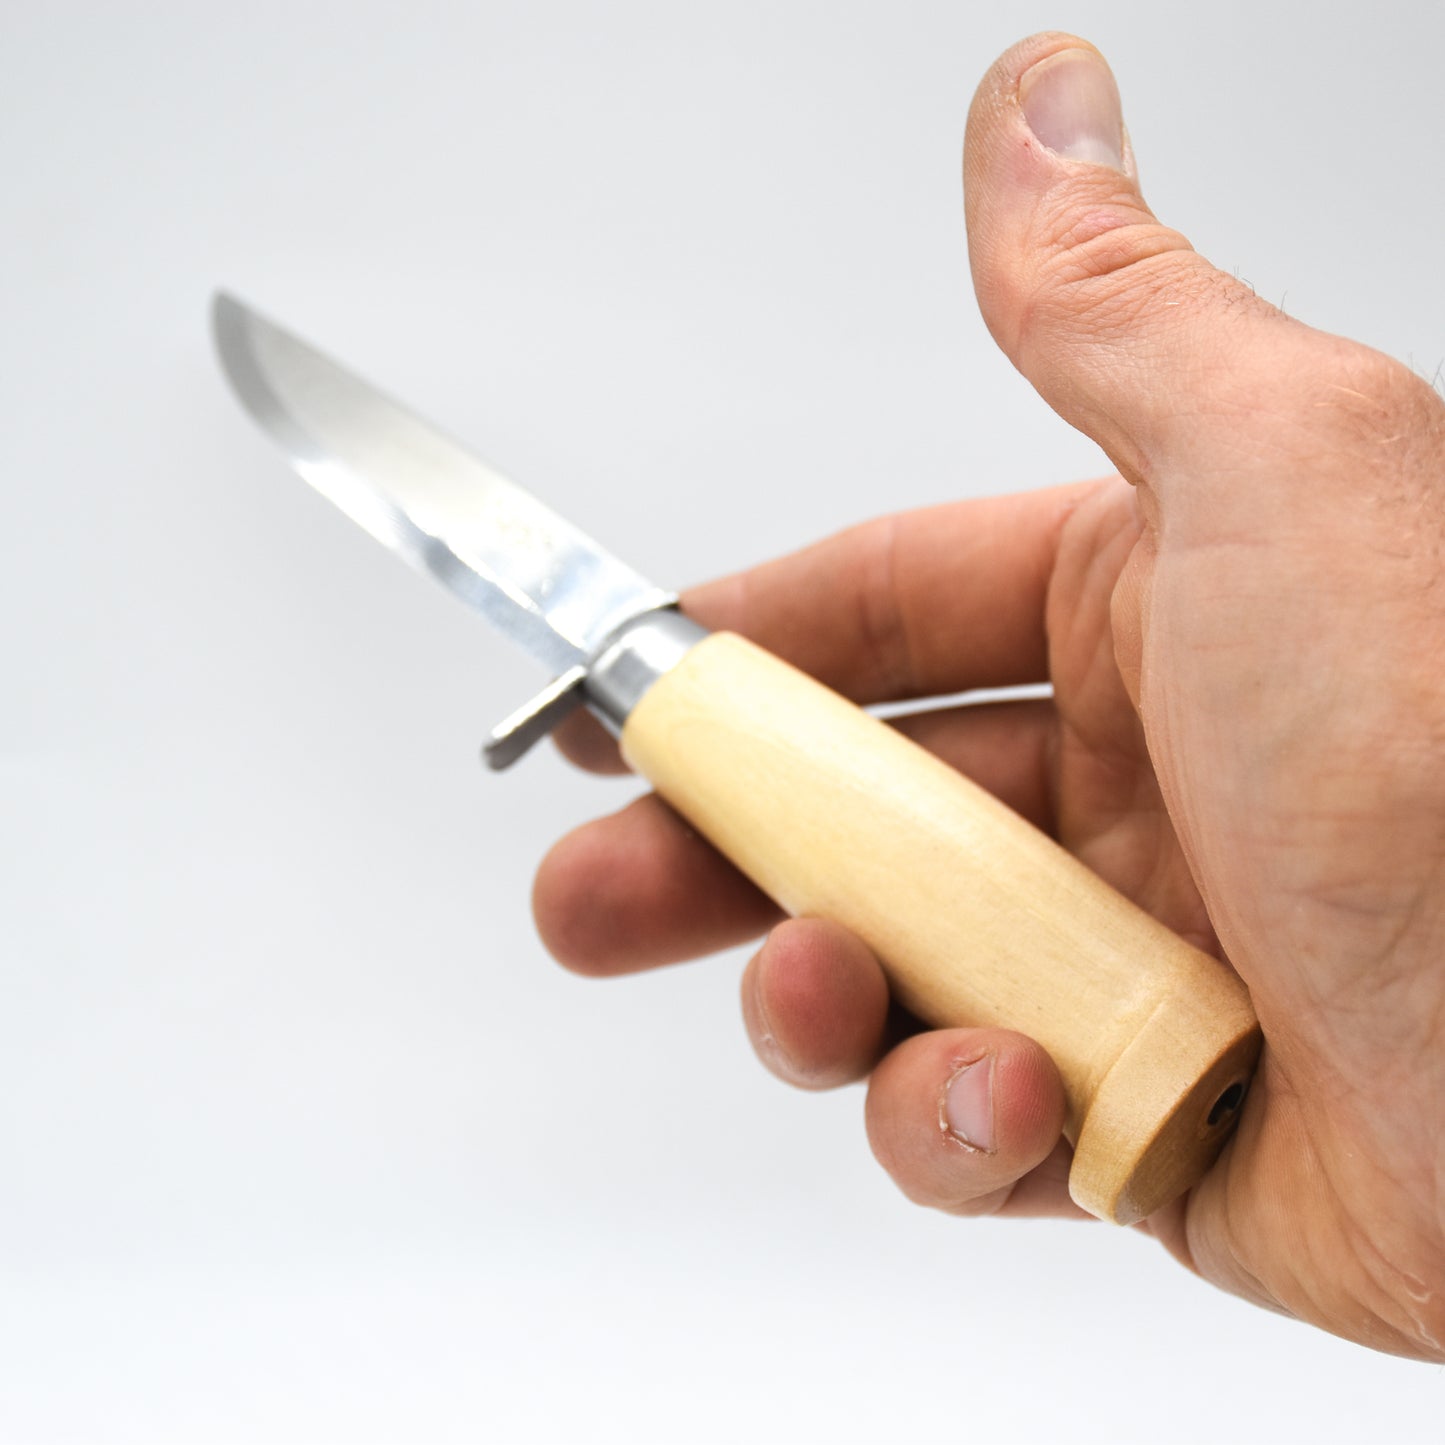 Vintage Whittling Knife - E.Jönsson - Standard Size